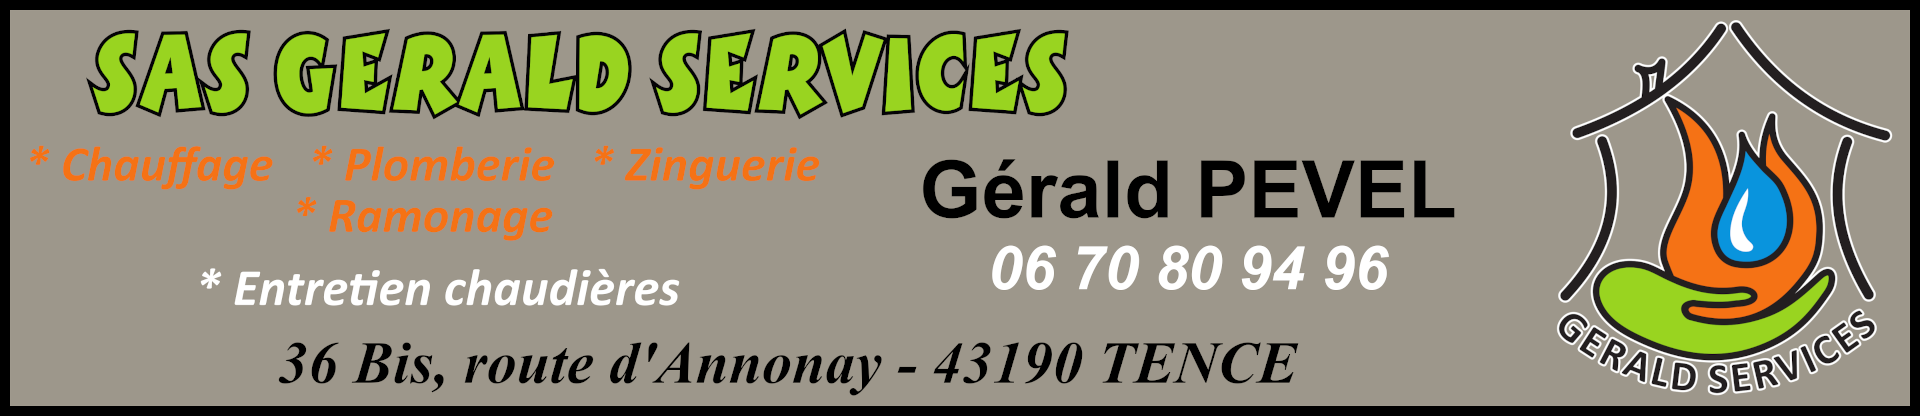 Sas gerald services internet